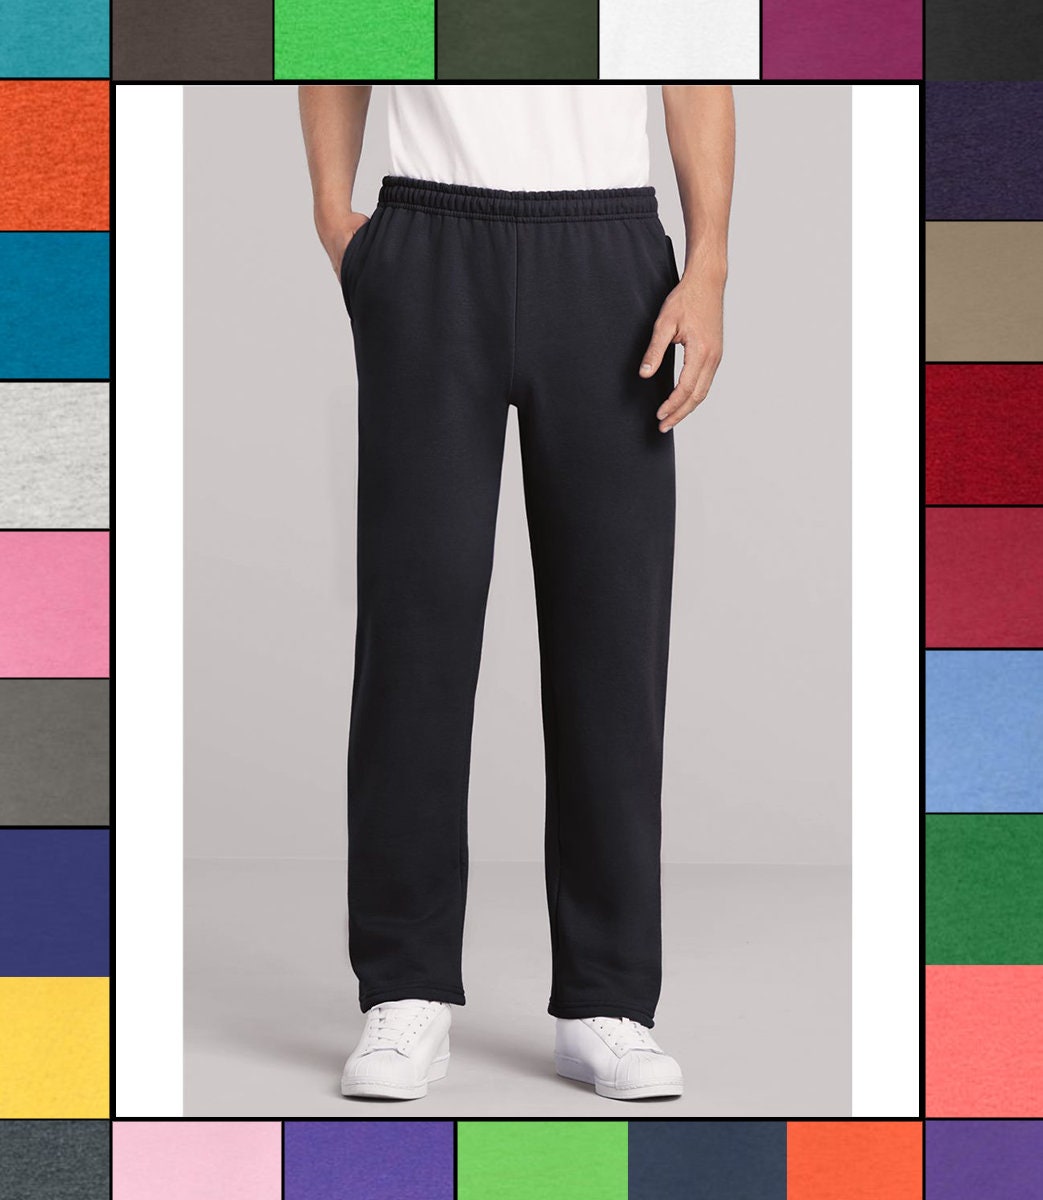 NuBlend Pocketed Open-Bottom Sweatpants - 974MPR - Jerzees - Printed Shirts